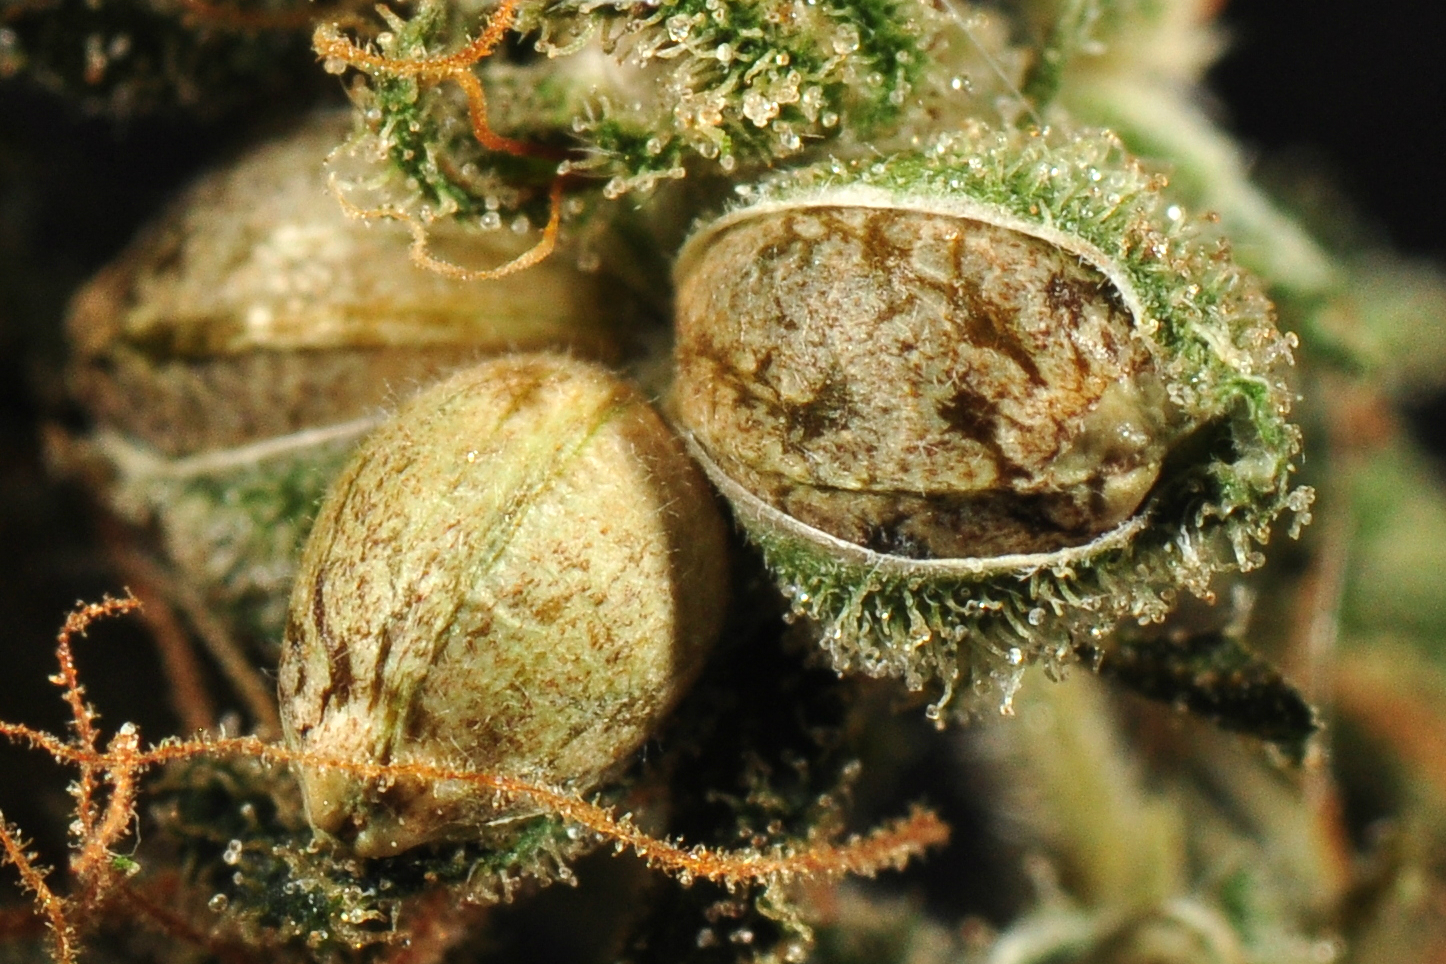 Identifying Female Cannabis Seeds